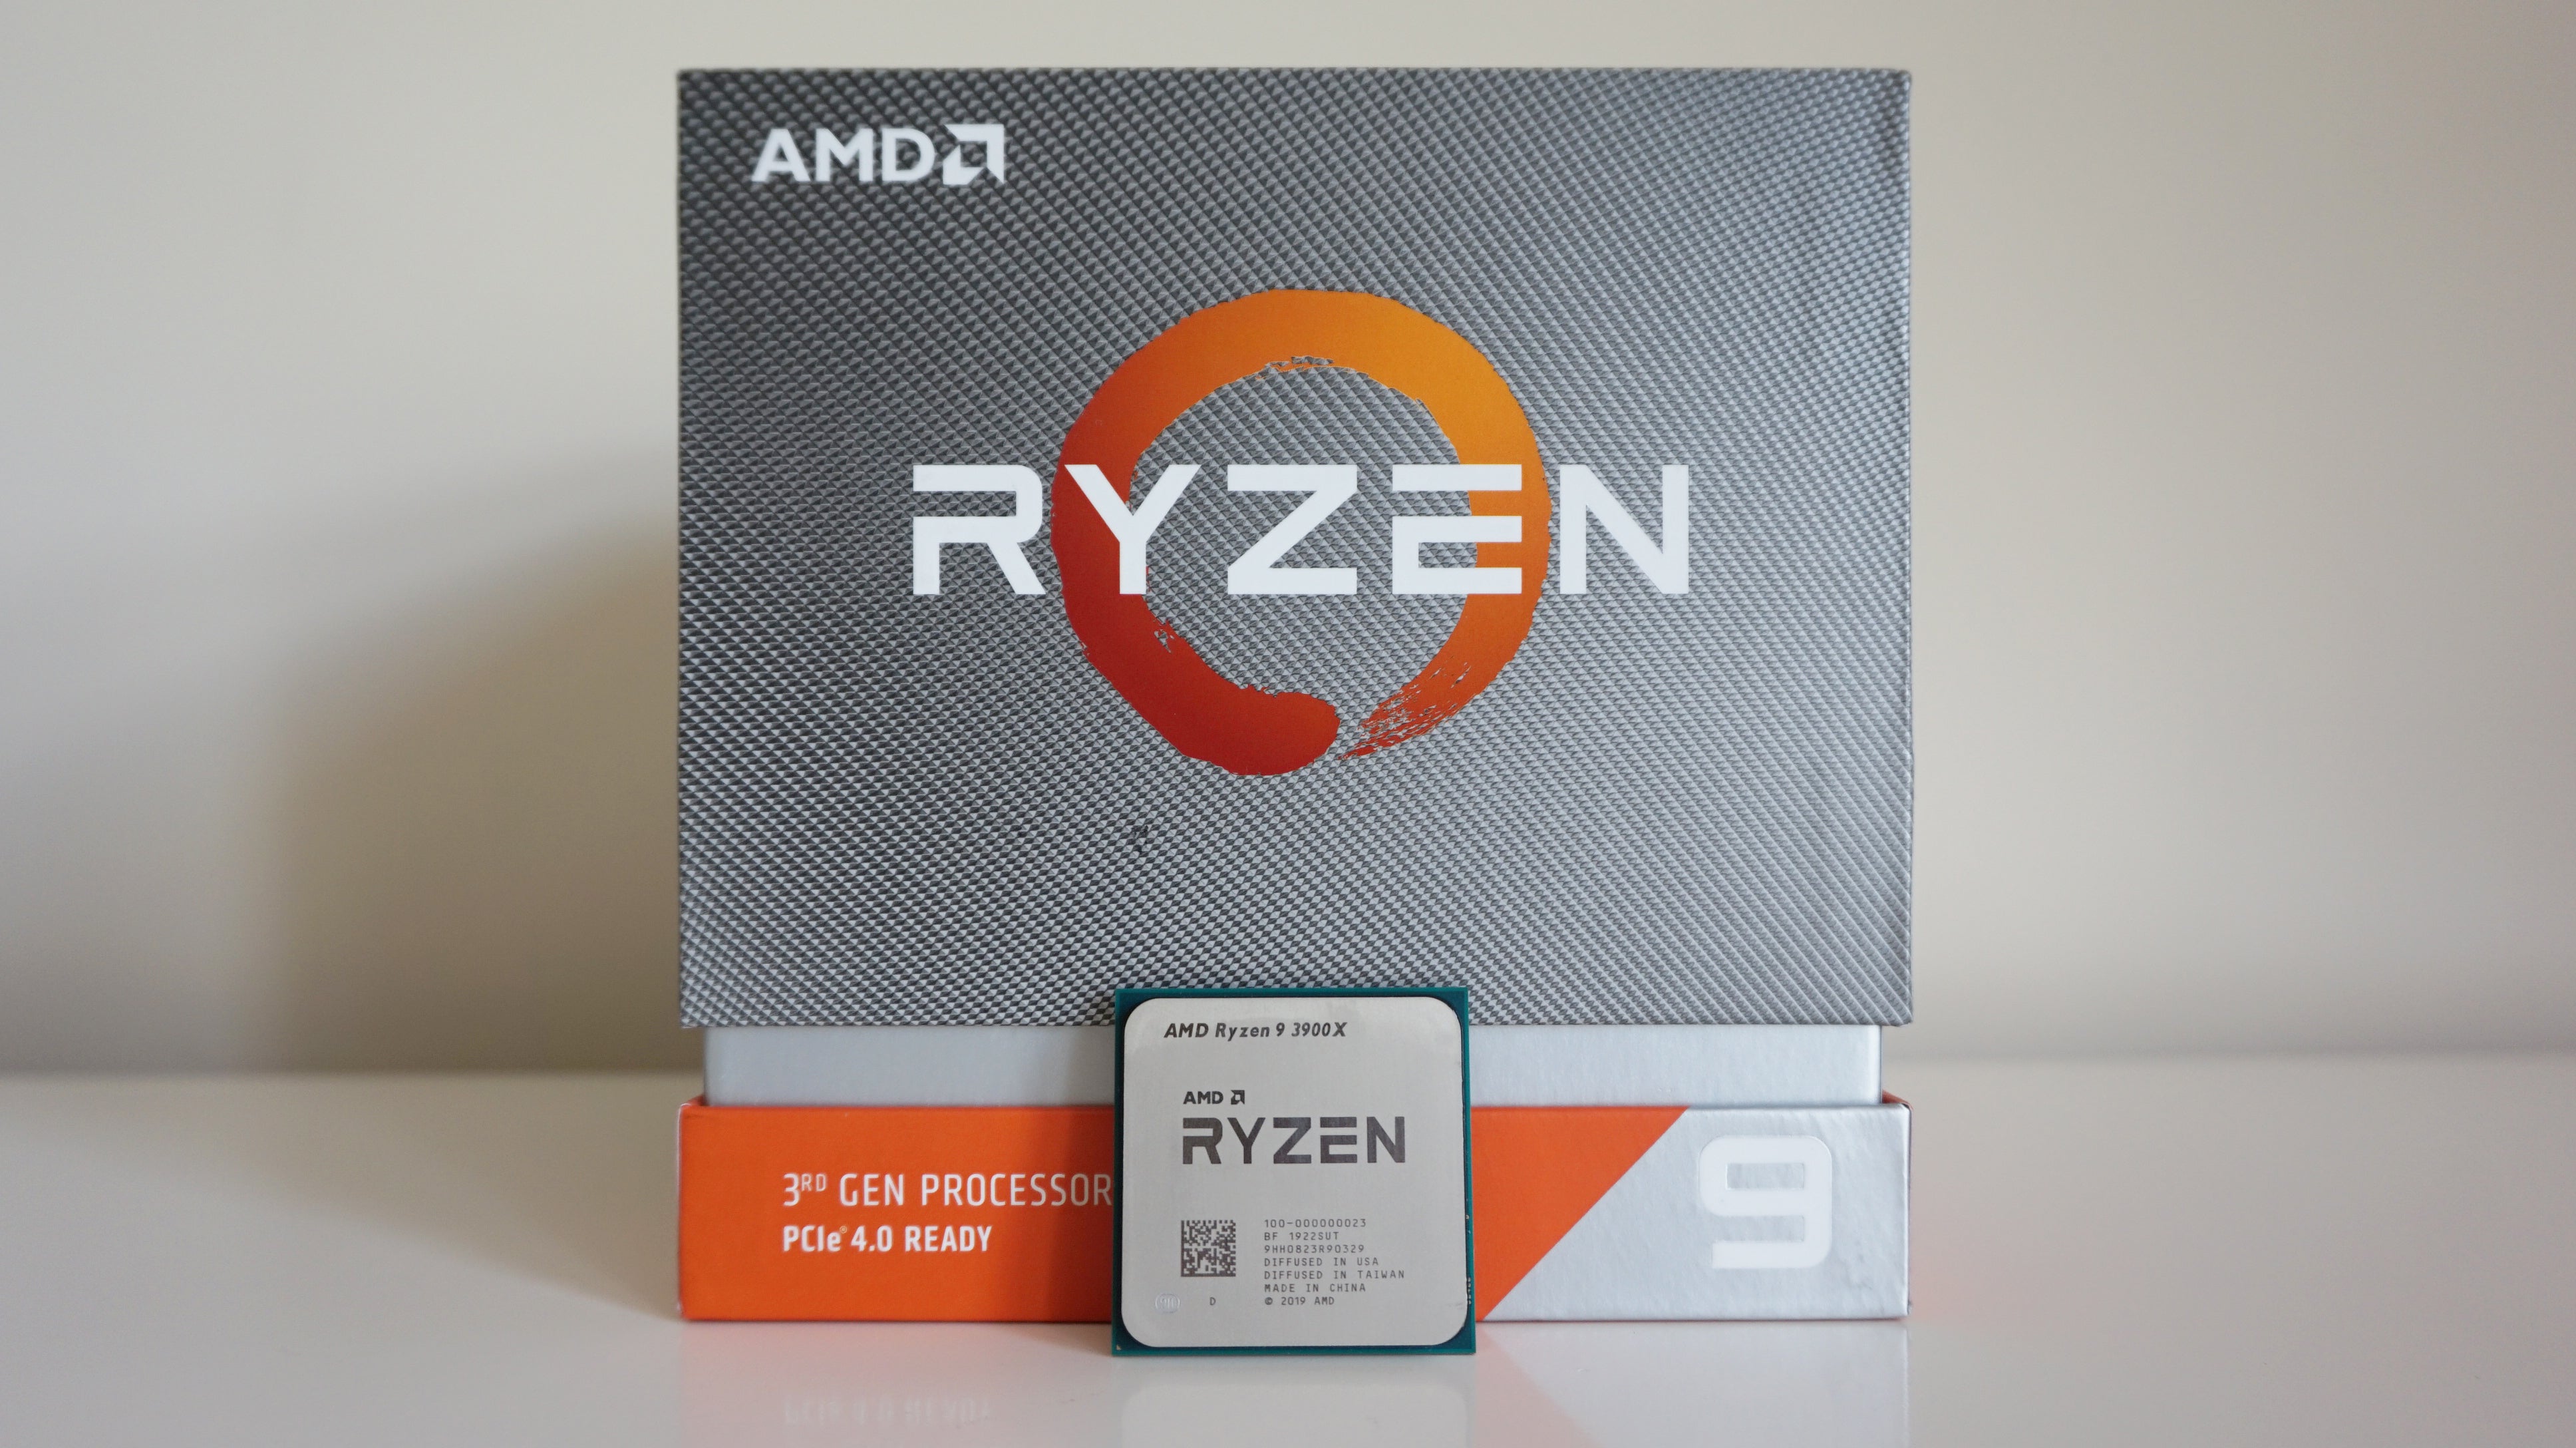 AMD Ryzen 9 3900X review: The Core i9-9900K killer? | Rock 